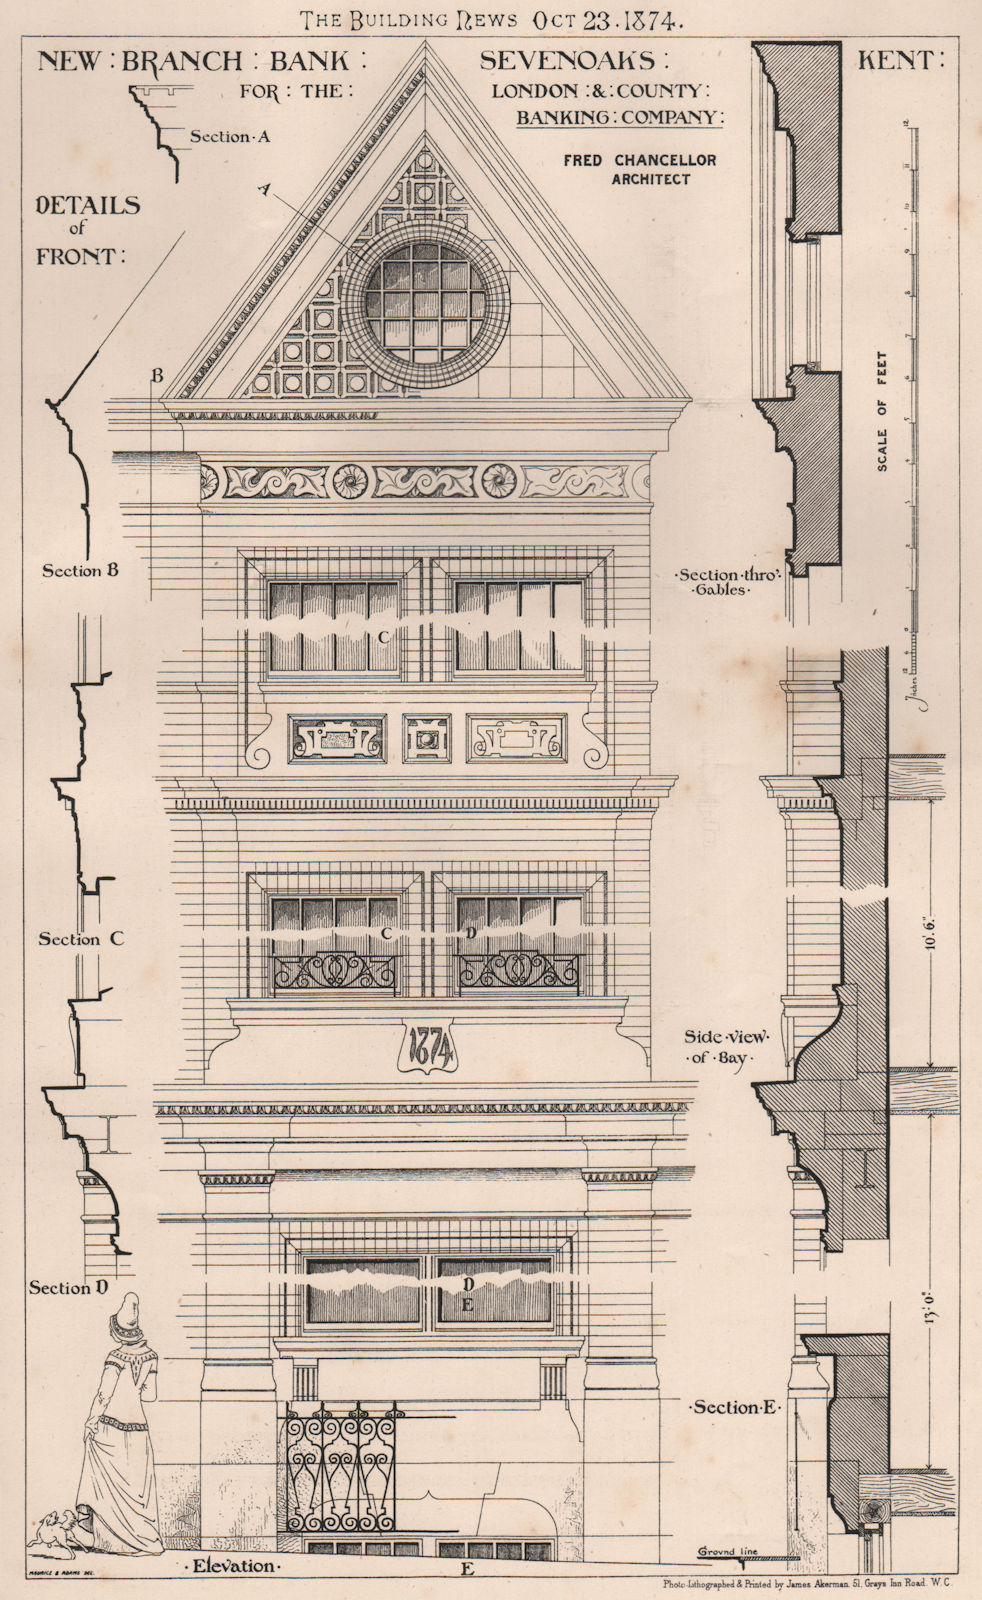 Associate Product London & County Banking Company branch, Sevenoaks, Kent; Fred Chancellor 1874